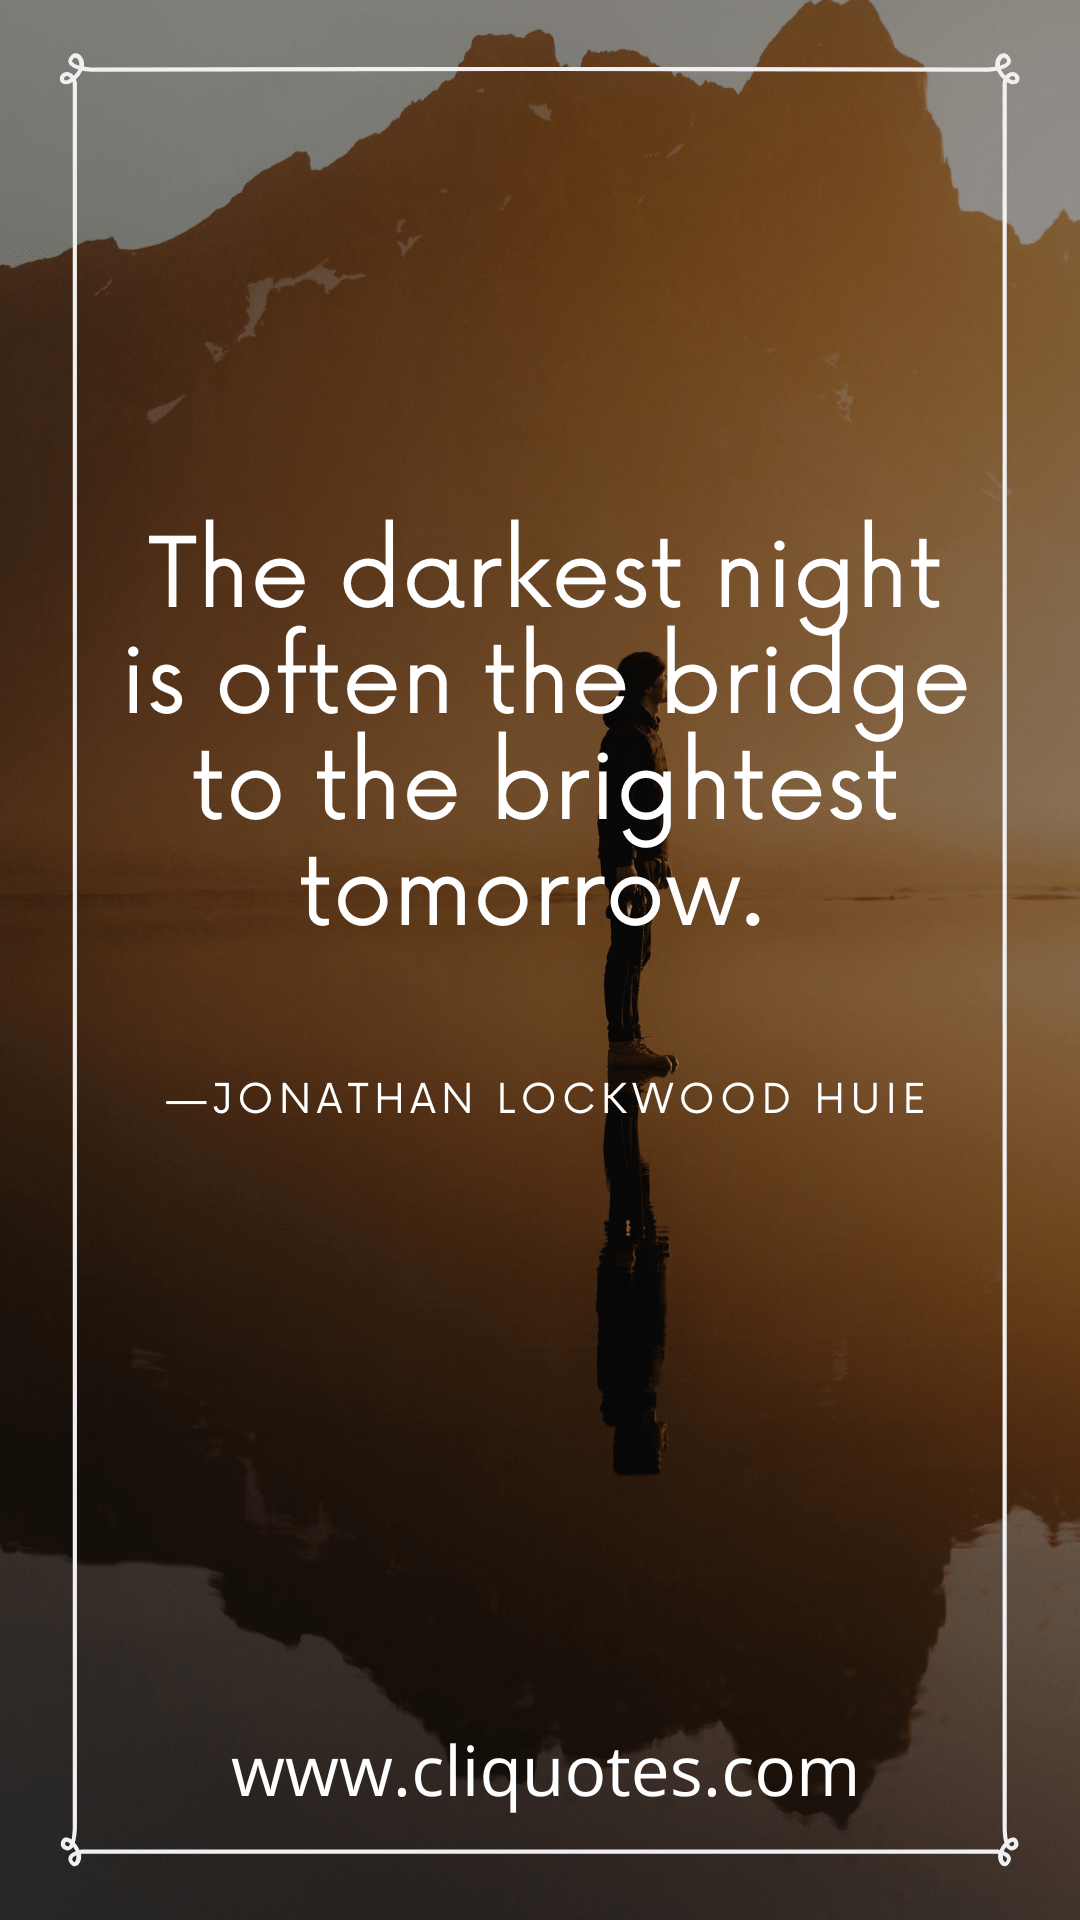 The darkest night is often the bridge to the brightest tomorrow. —JONATHAN LOCKWOOD HUIE